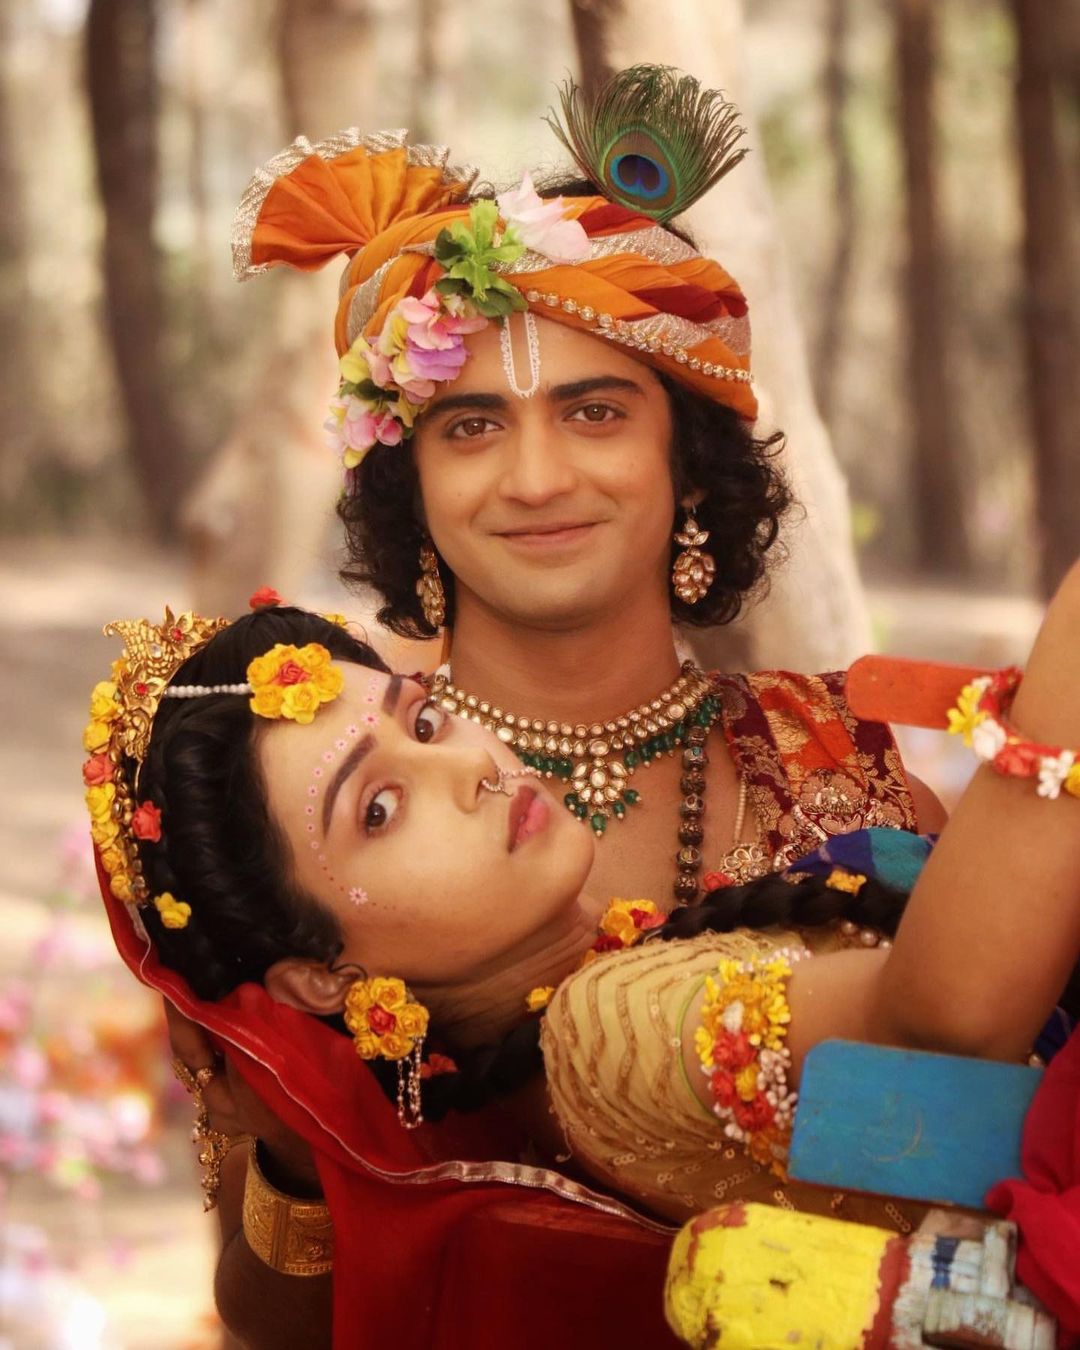 RadhaKrishn's Sumedh Mudgalkar And Mallika Singh Look Super-Hot In This Indian Avatar! 2